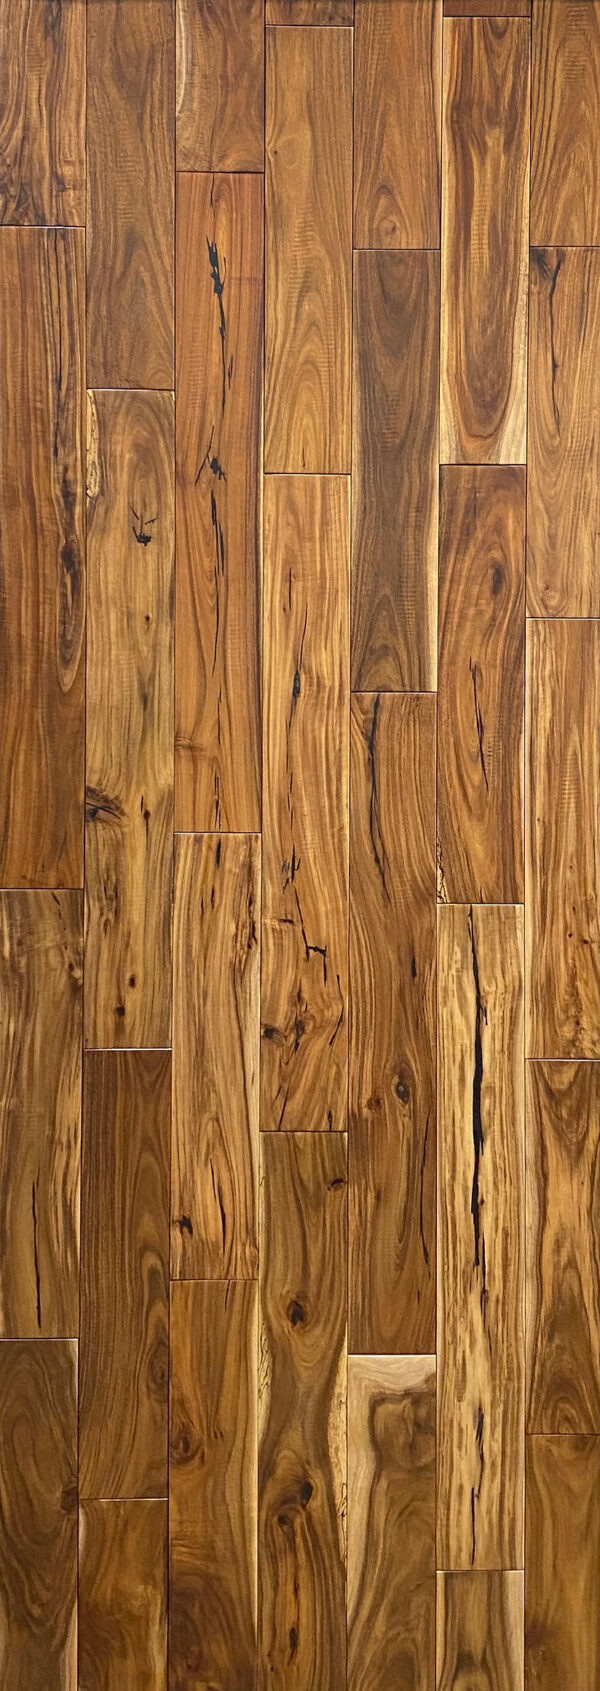 Acacia Natural Hardwood Flooring